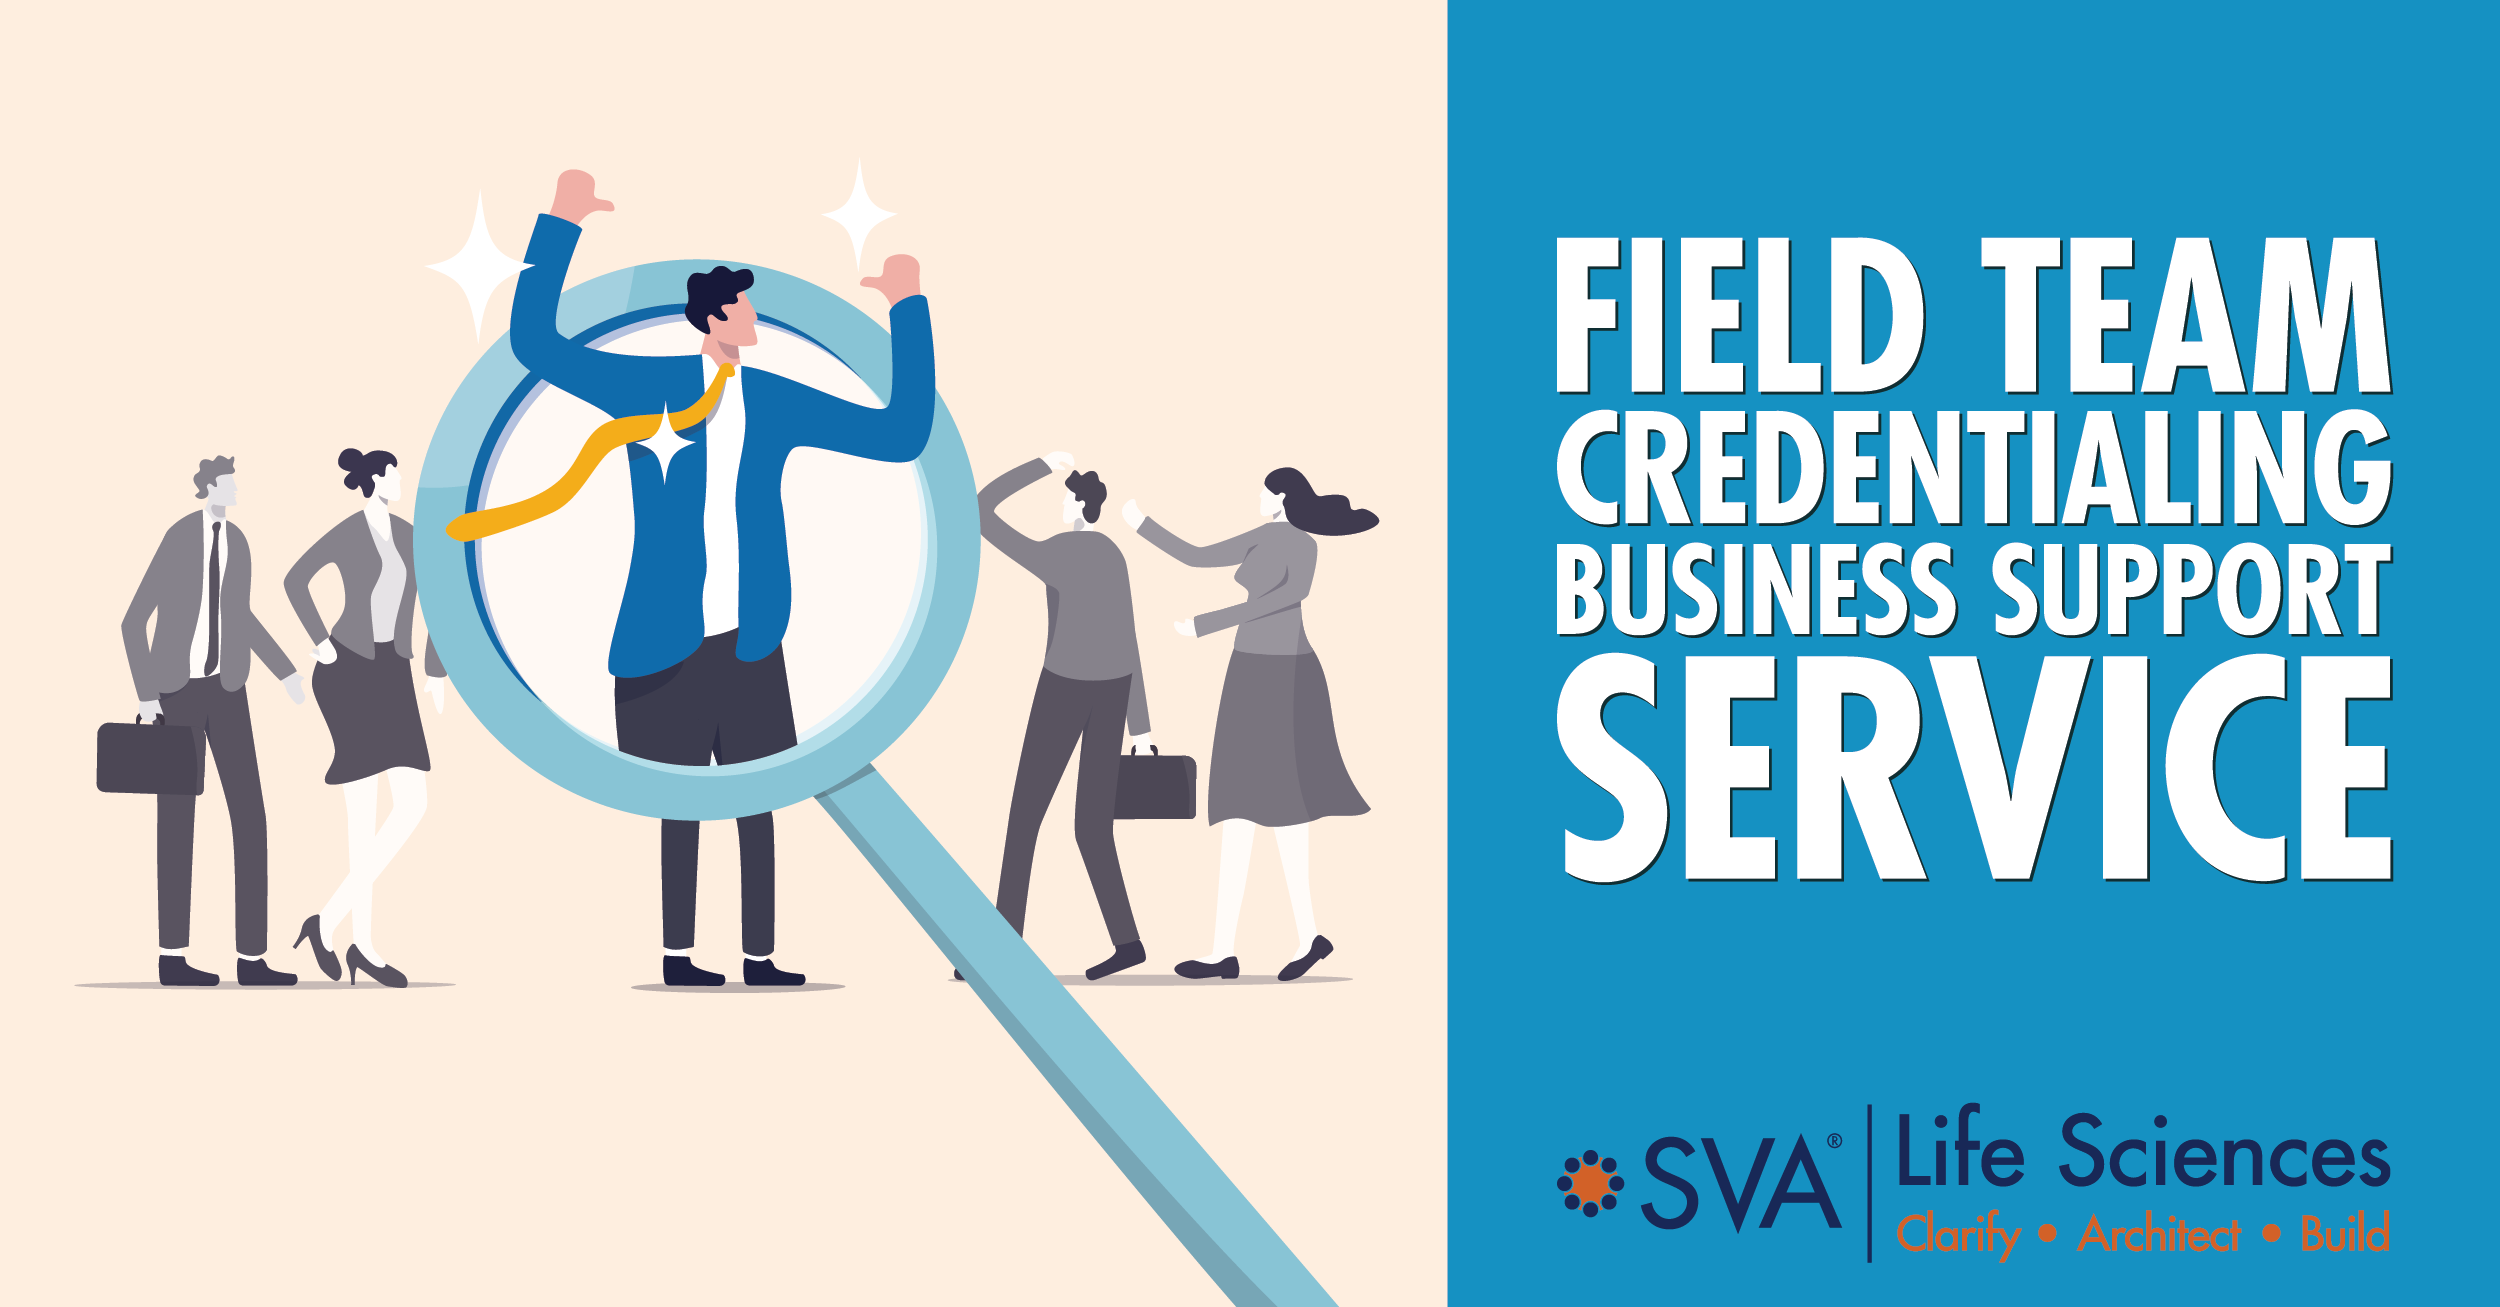 Field Team Credentialing - Business Support Service | SVA